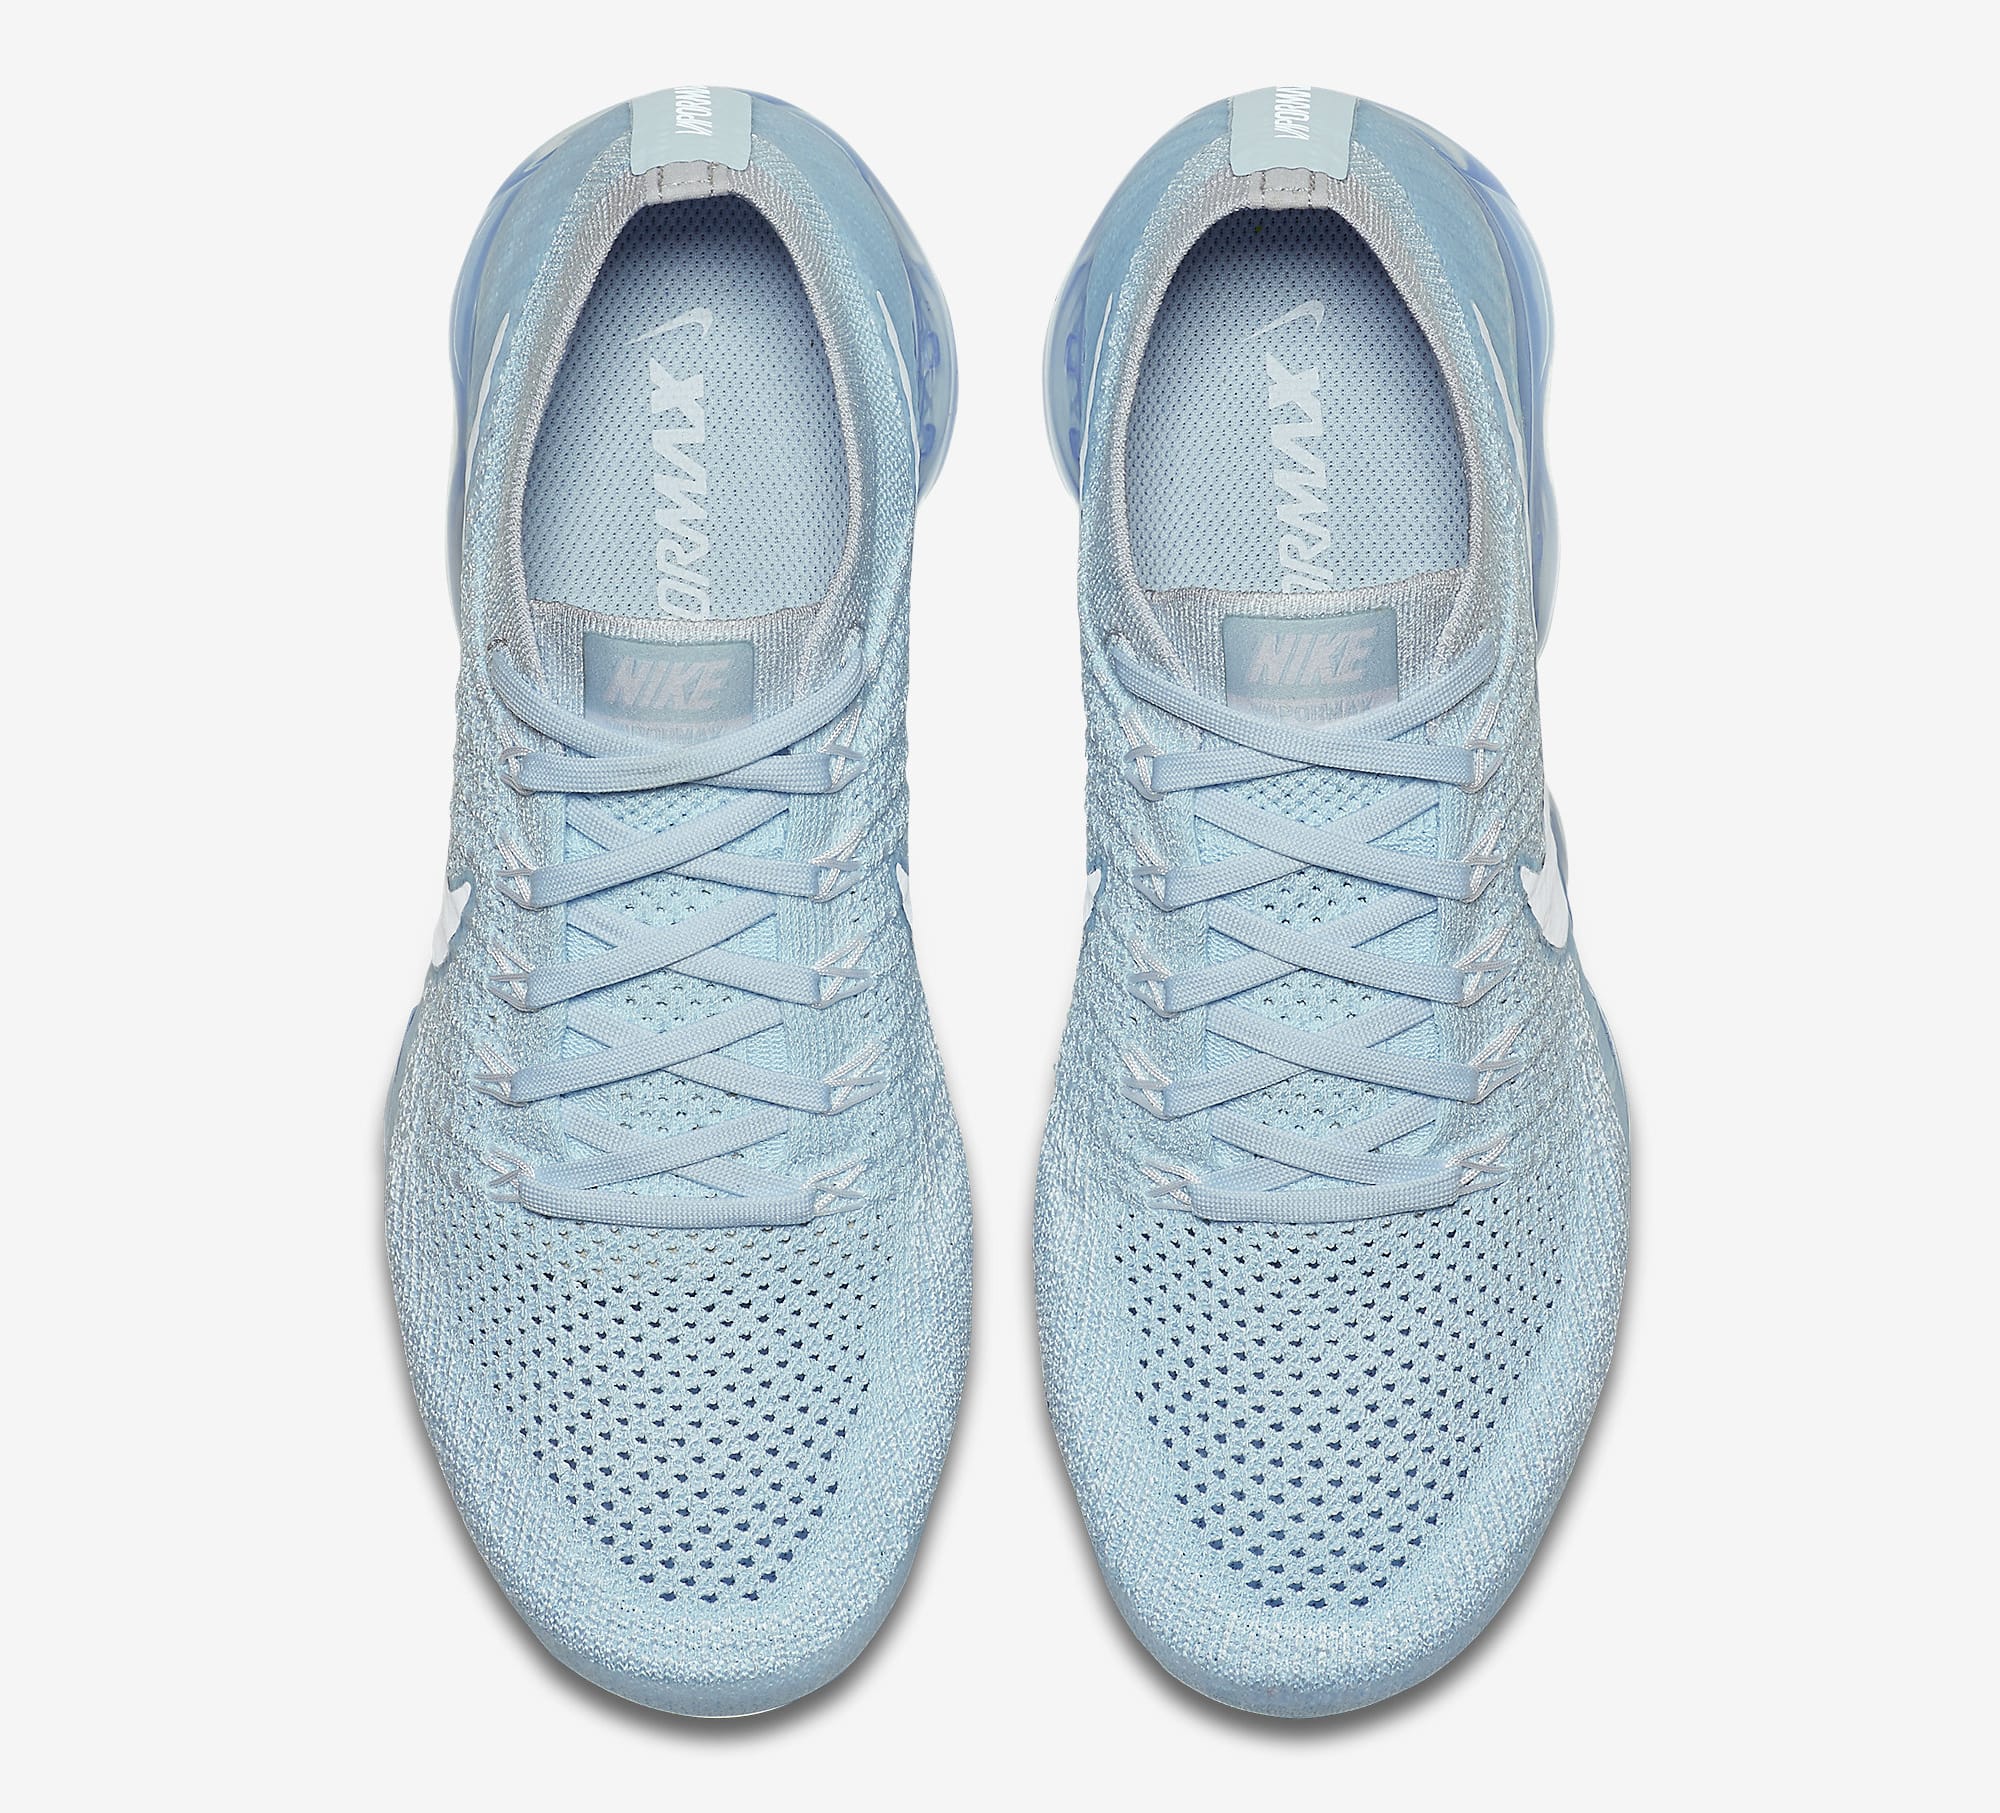 Glacier Blue Nike Vapormax 849557-404 Top